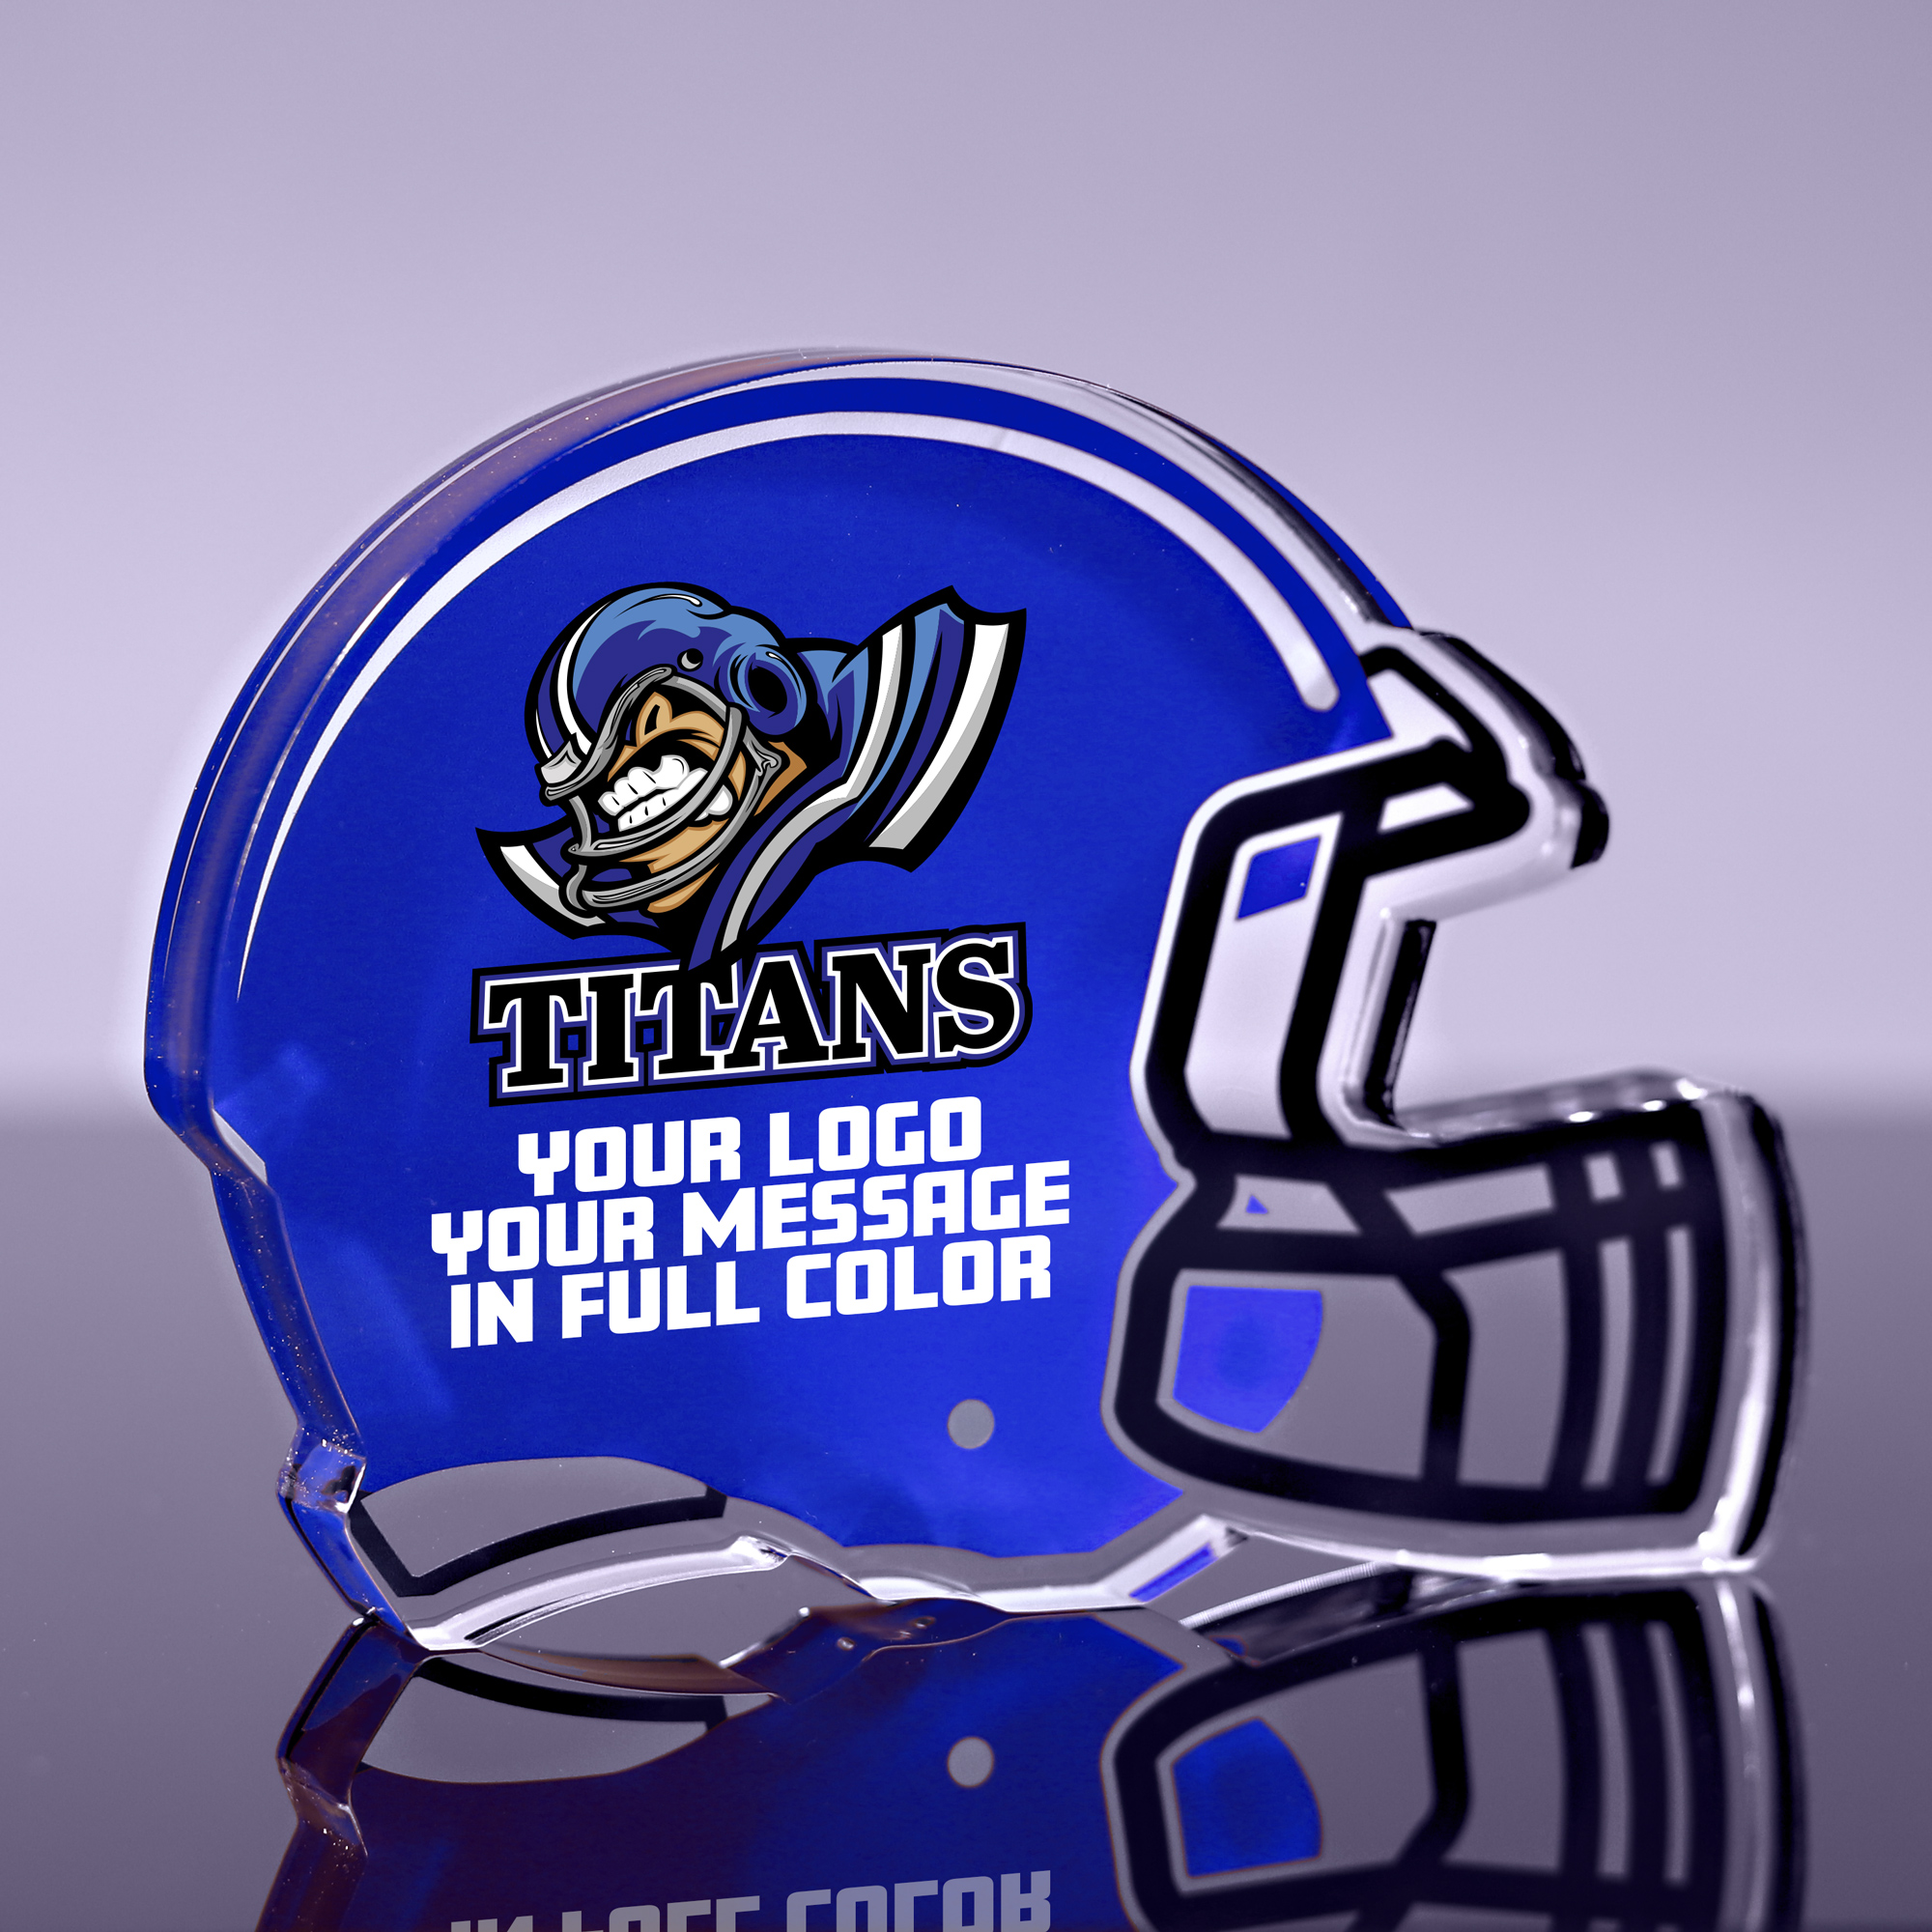 1 inch Thick Football Helmet Acrylic Award - 6 inch Color